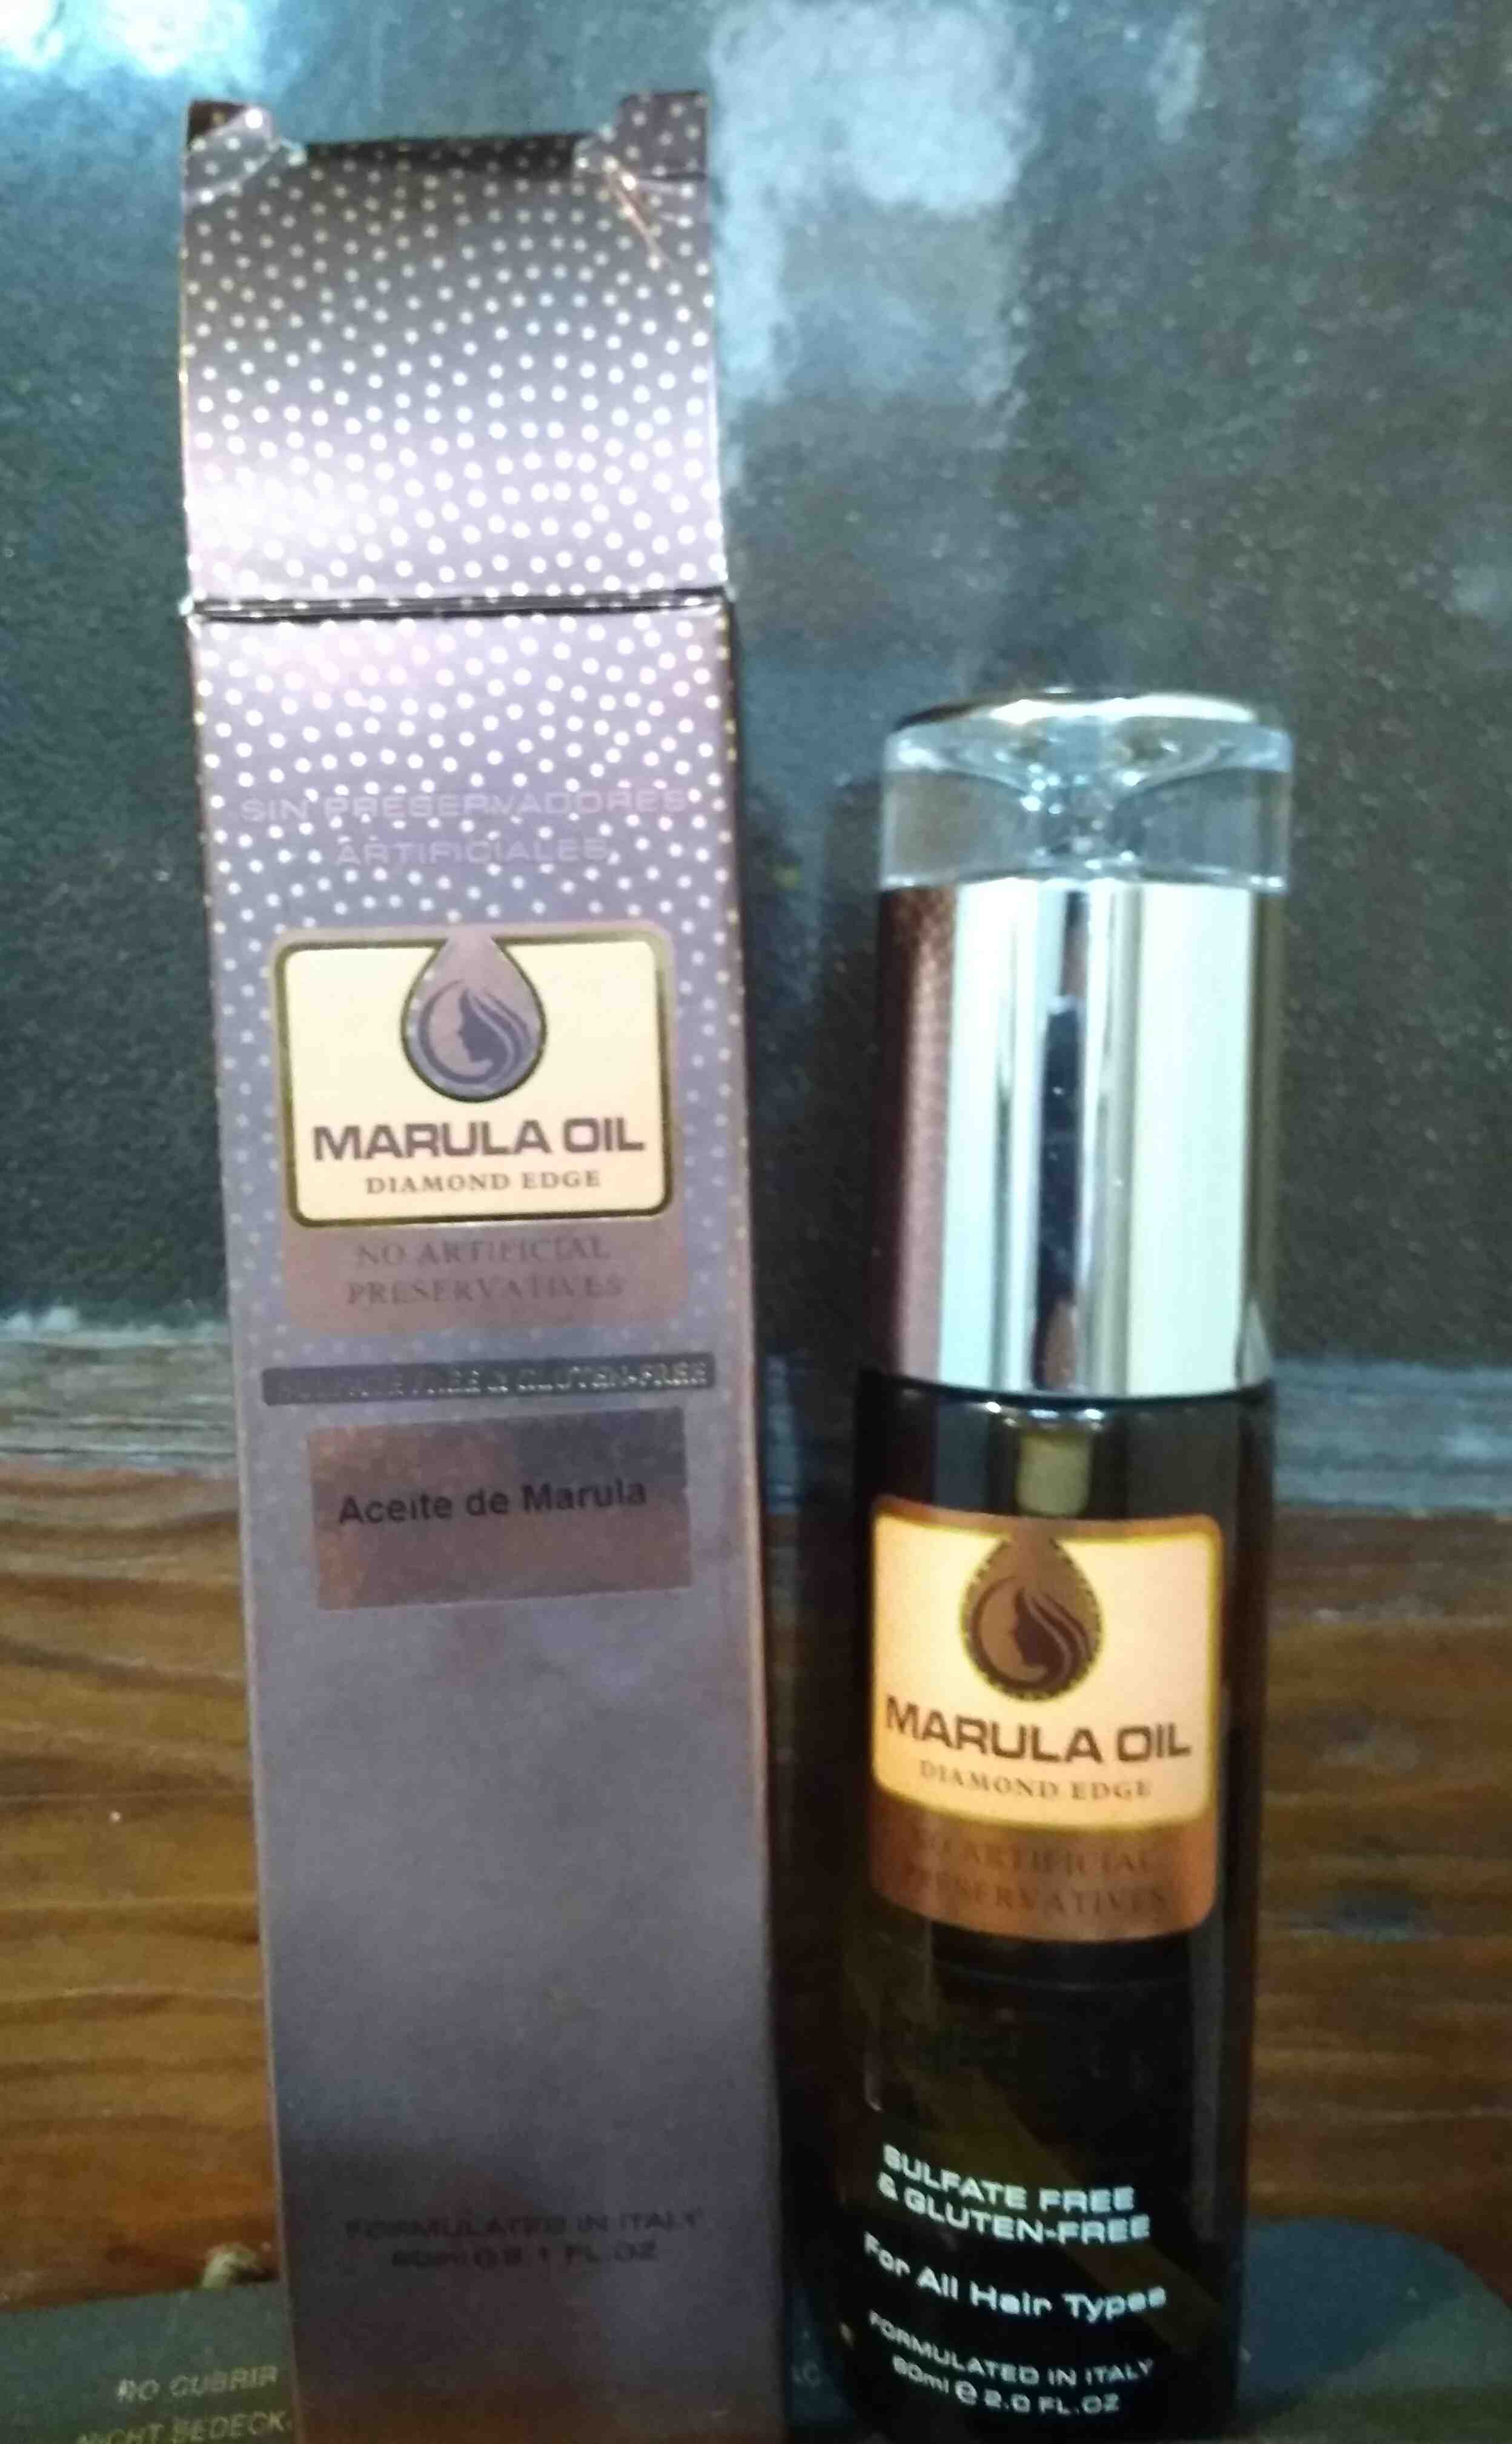 Marula oil diamond edge - Product - en